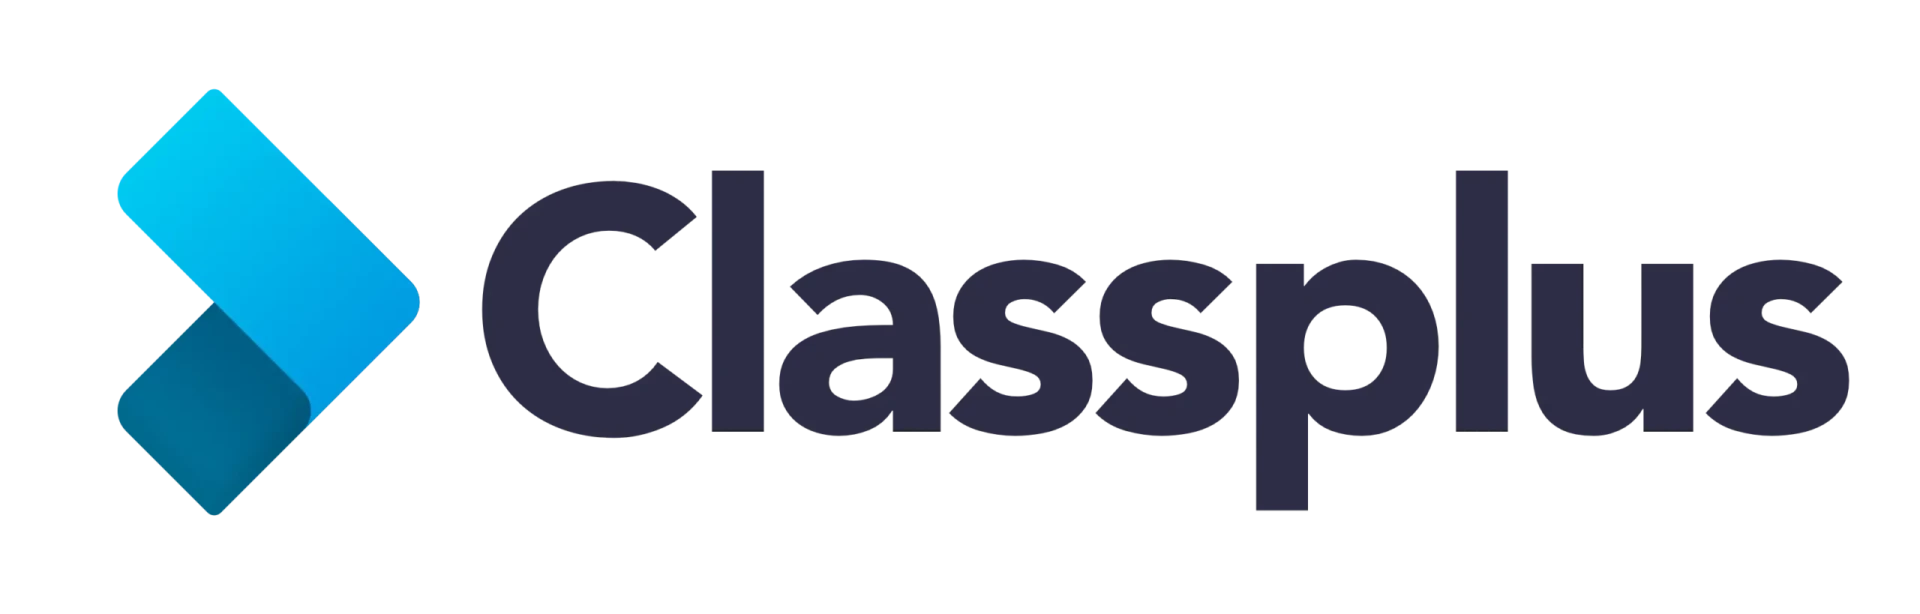 marketing strategy of classplus - classplus logo